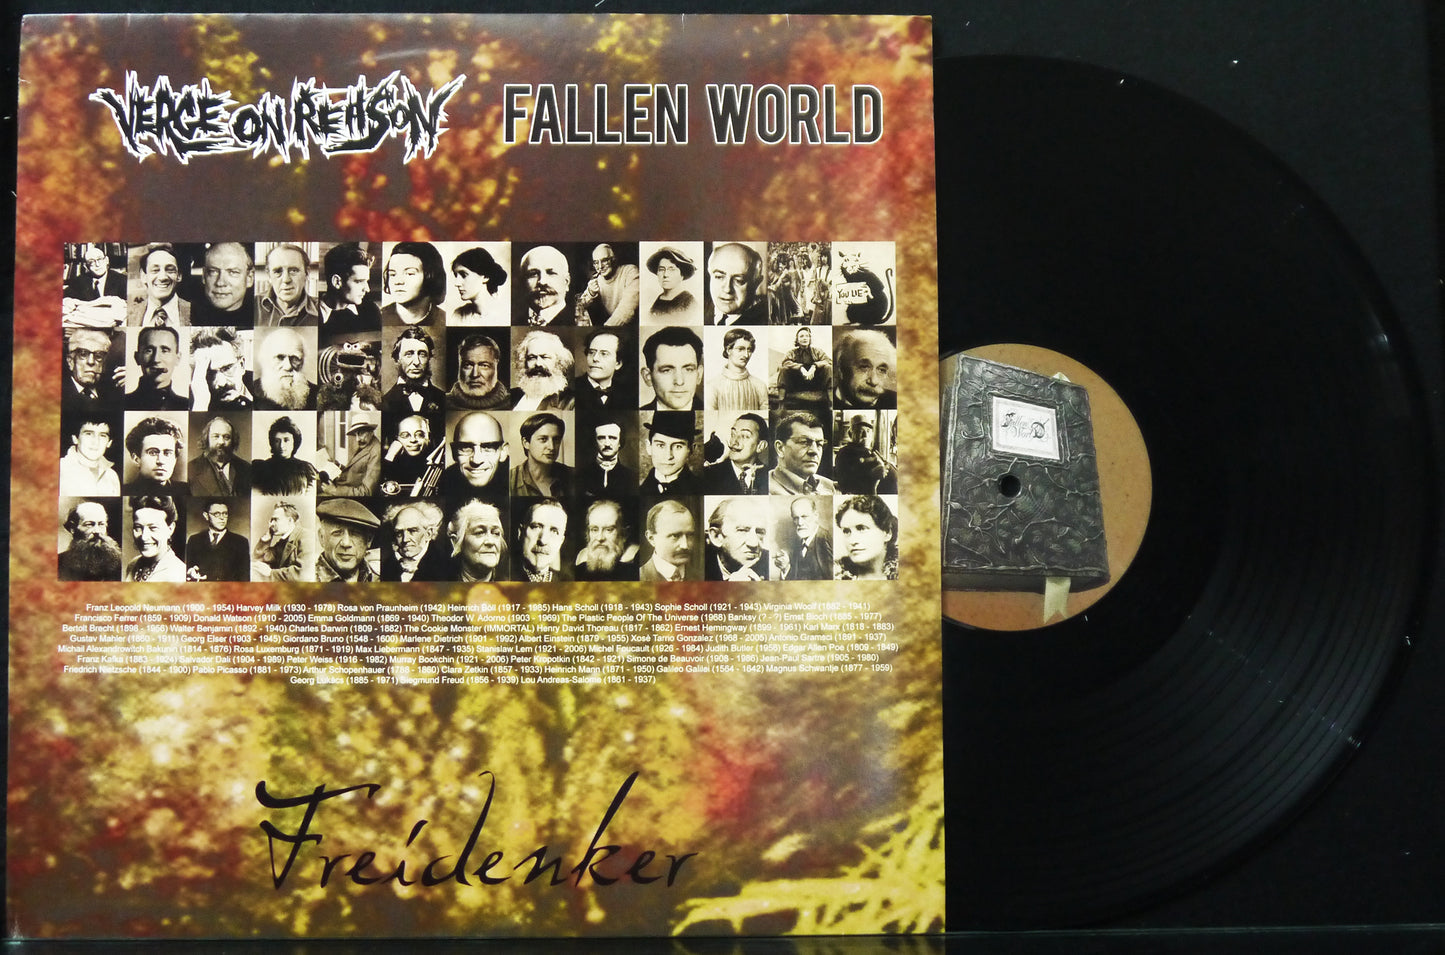 VERGE ON REASON / FALLEN WORLD - Split 12"